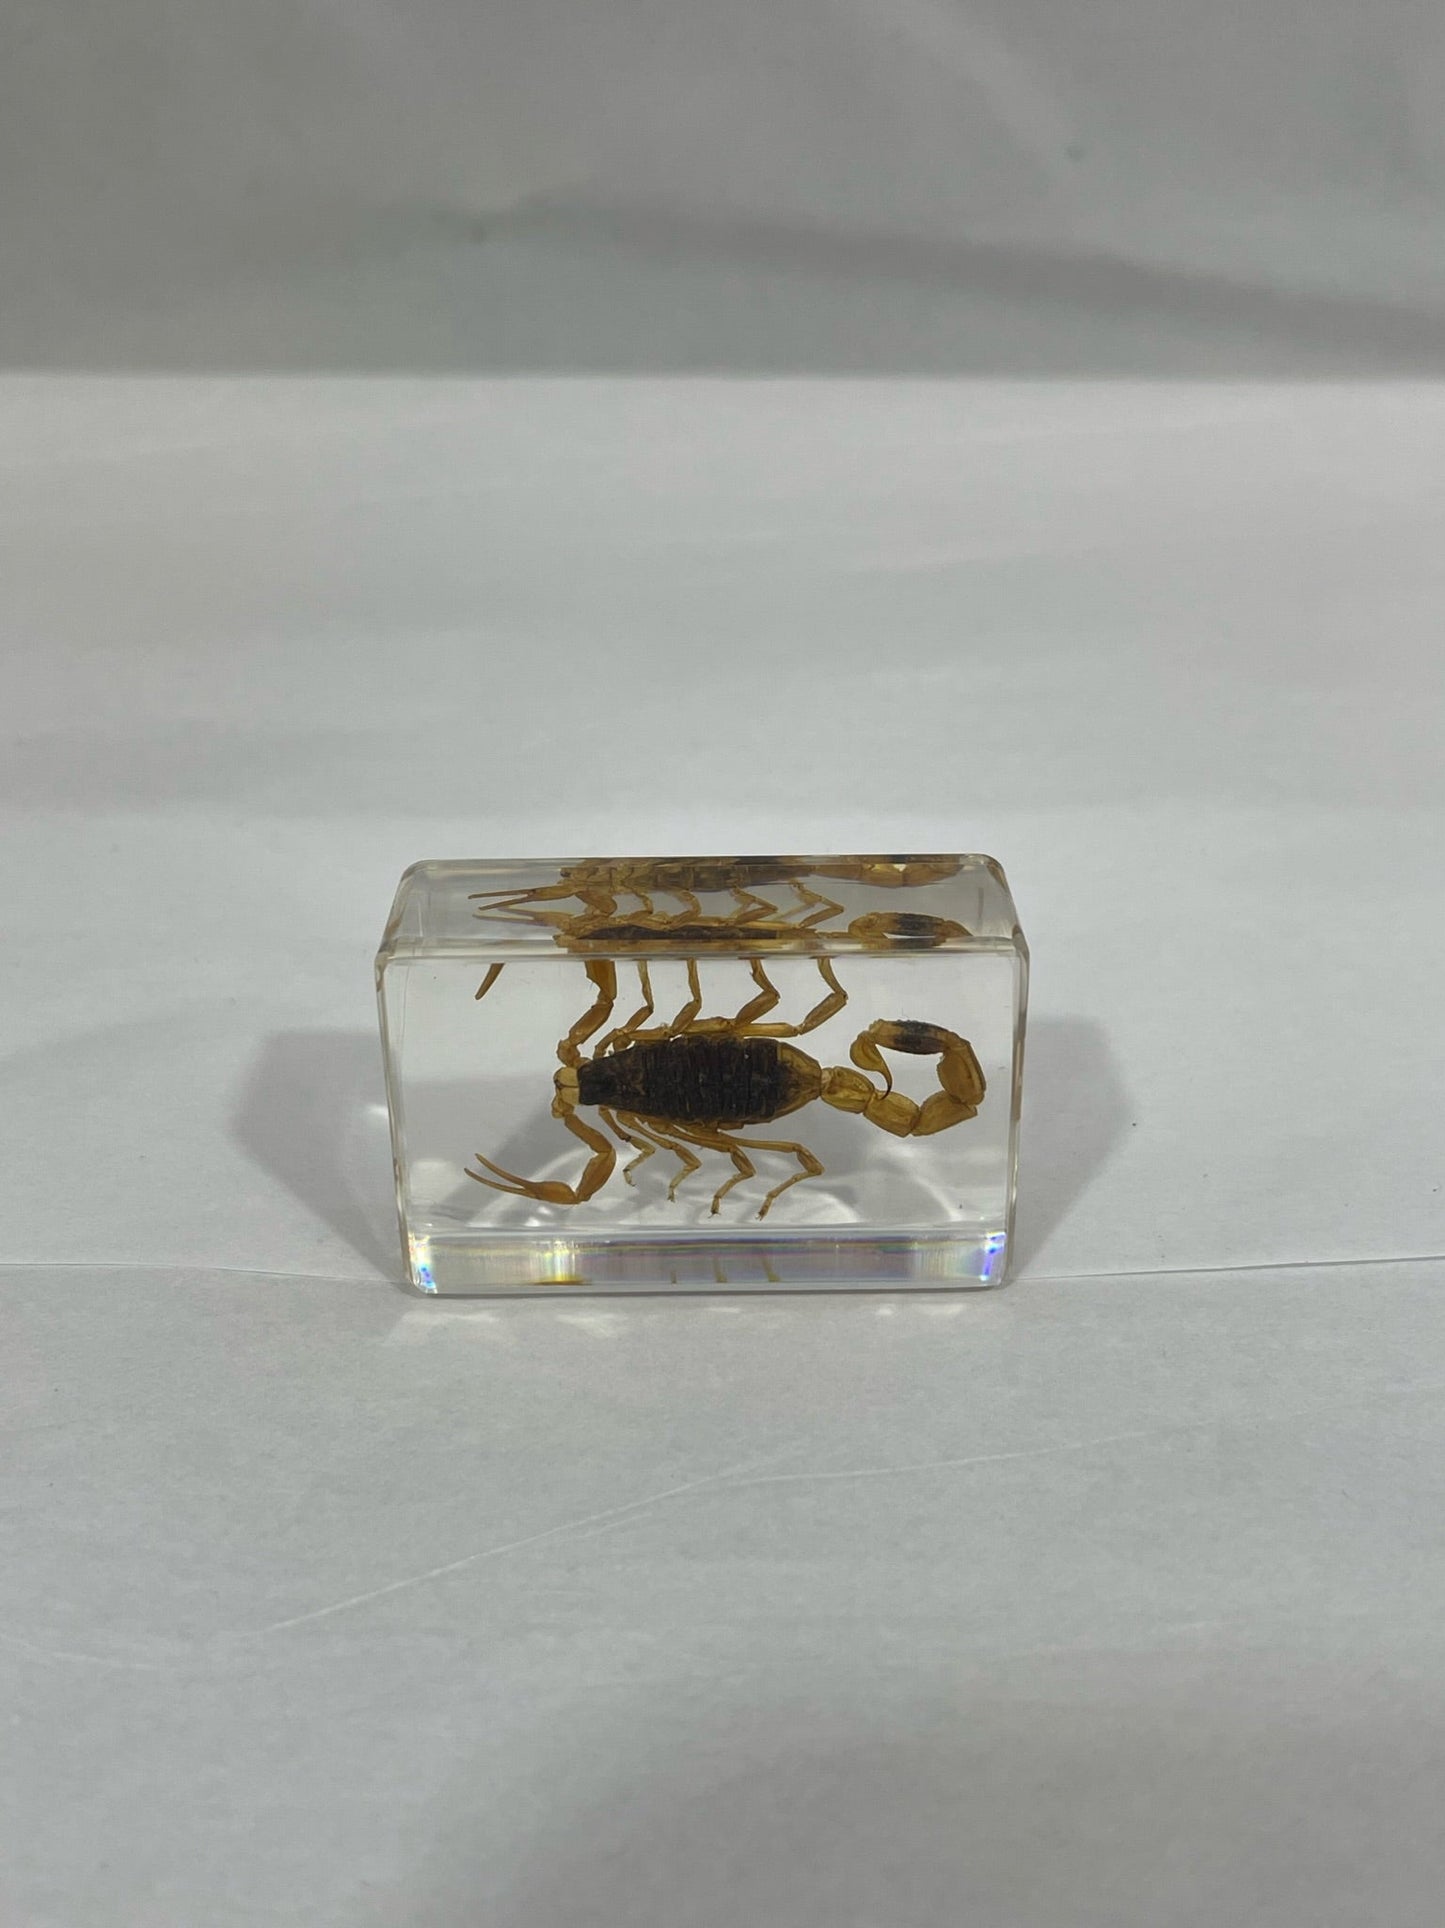 1.1" Cuboid Scorpion Paperweight